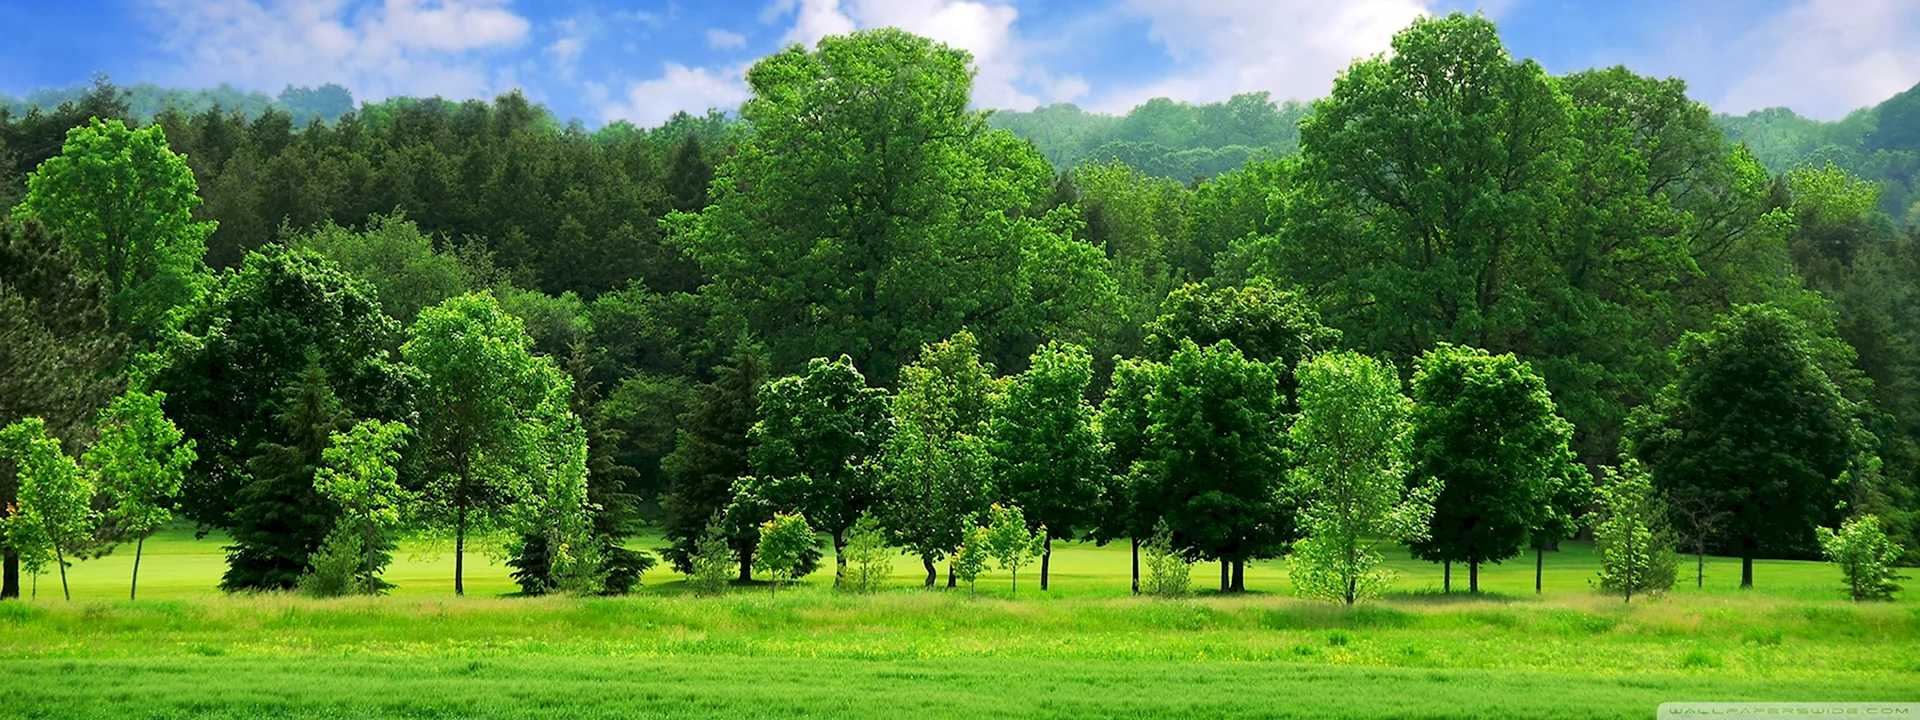 Панорама деревья